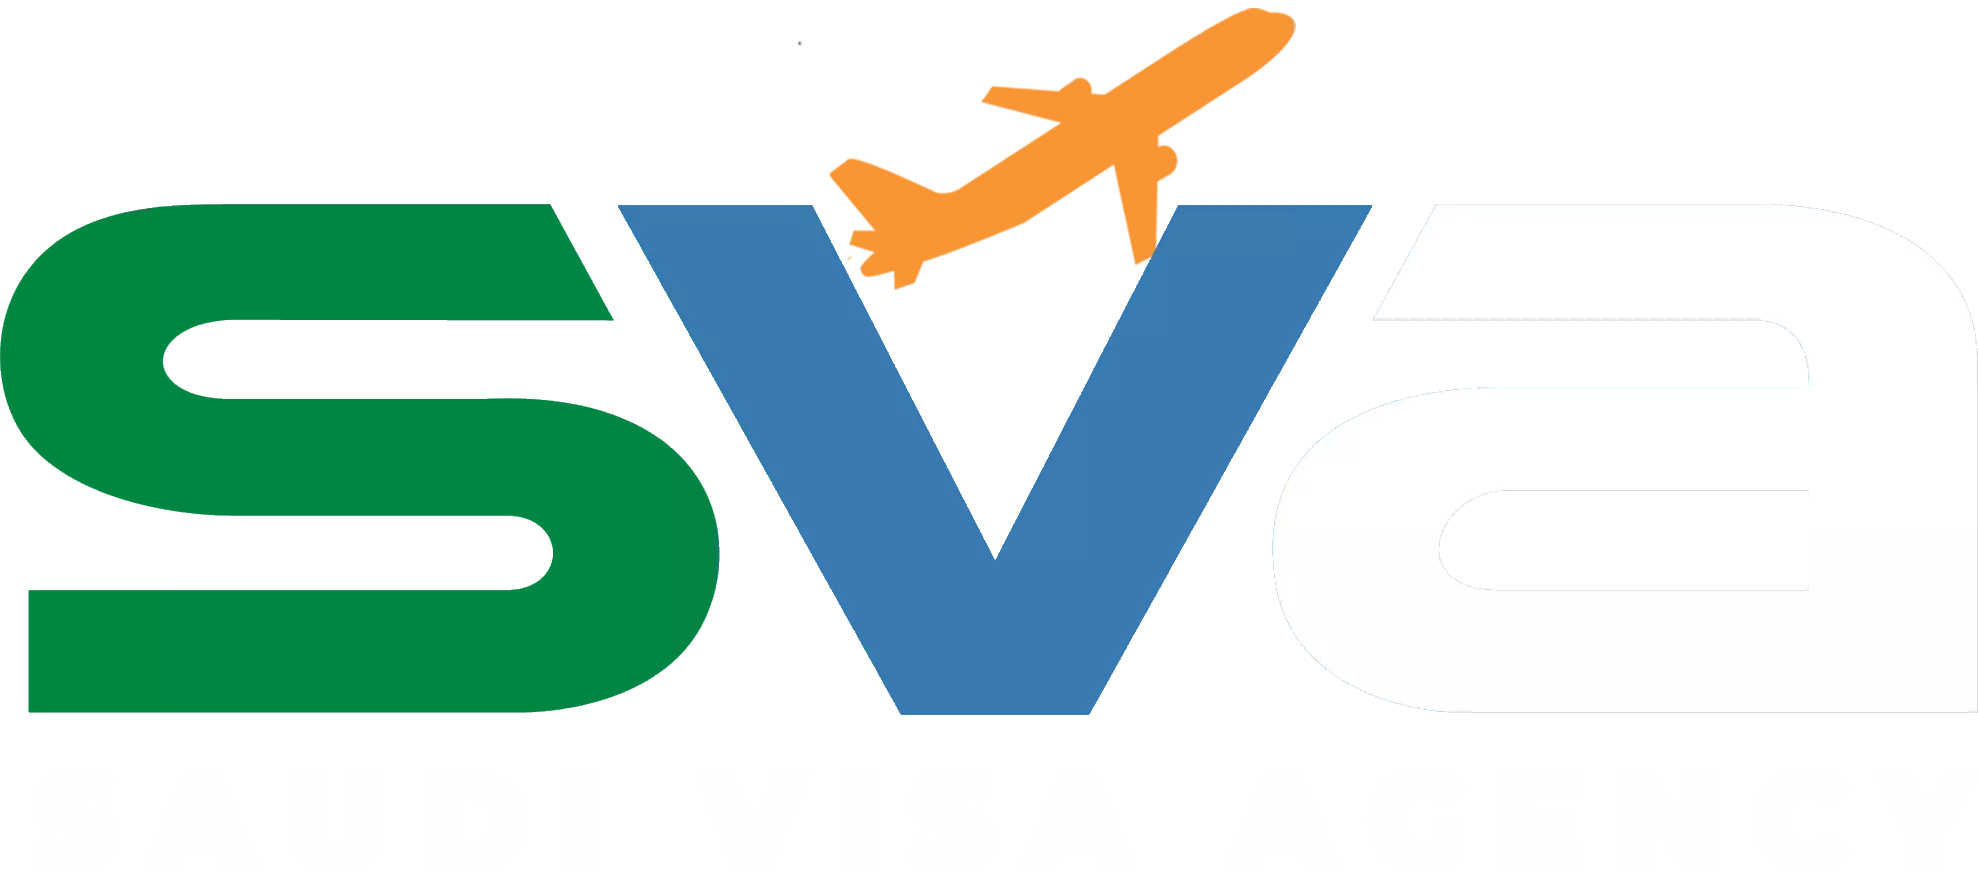 Chinese visa process